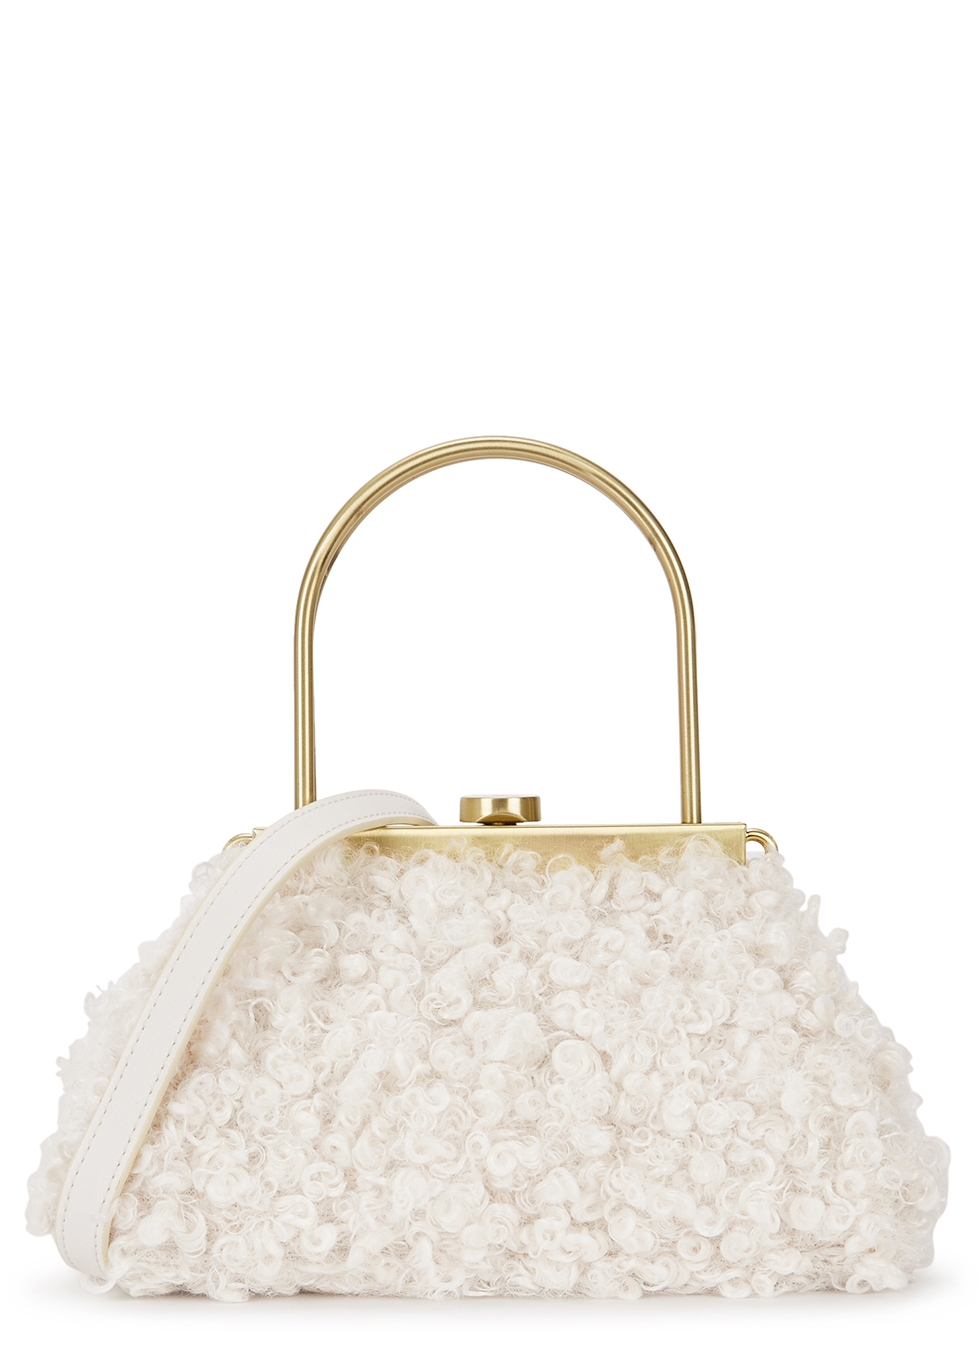 Cult Gaia Estelle mini ivory faux shearling top handle bag - Harvey Nichols